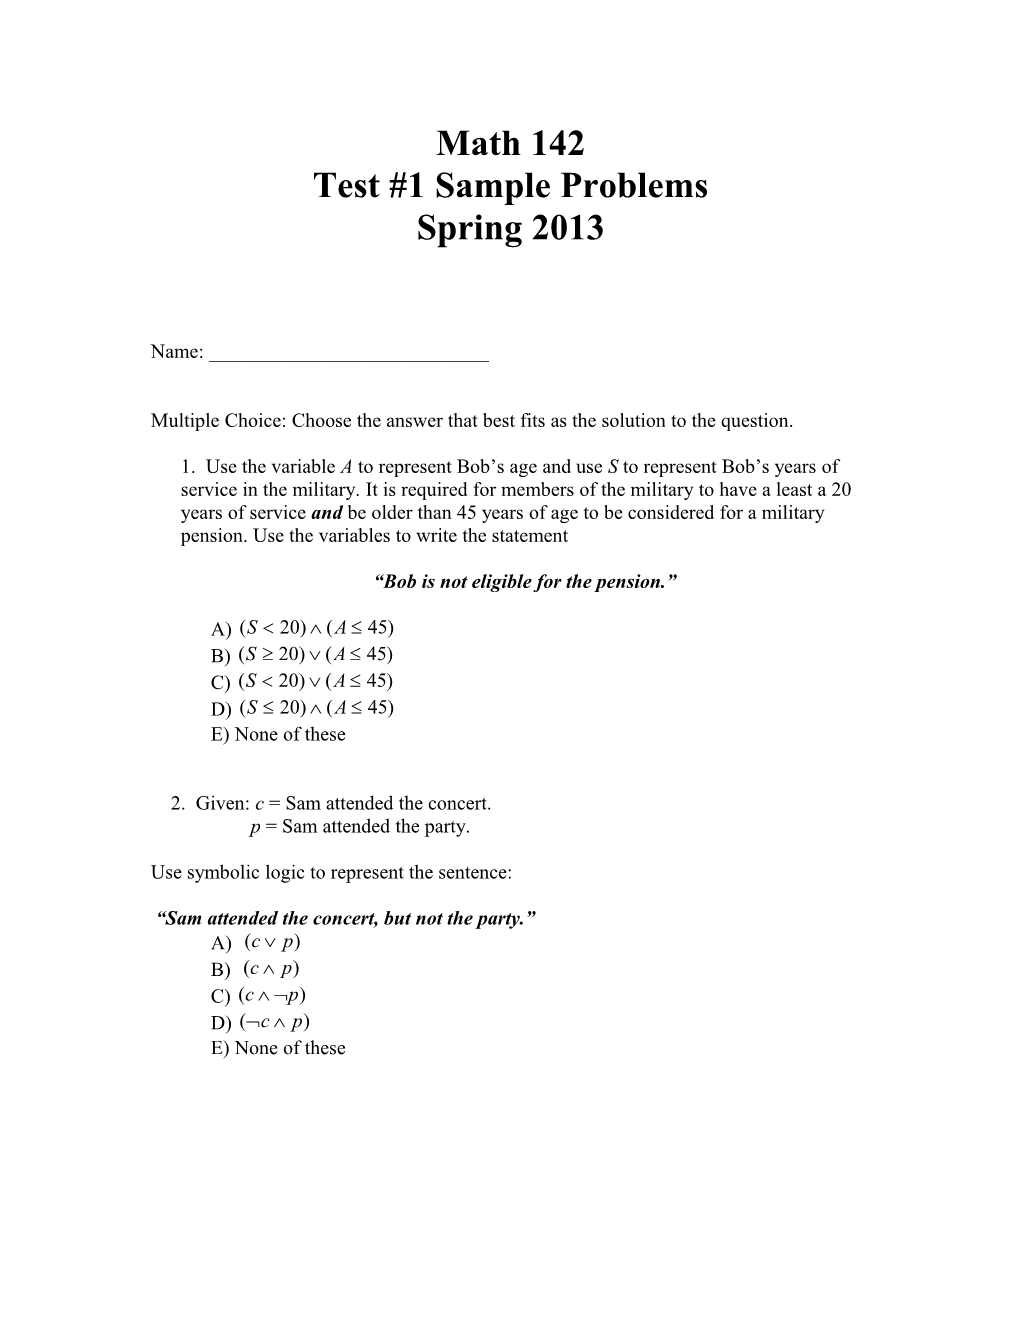 Test #1 Sample Problems